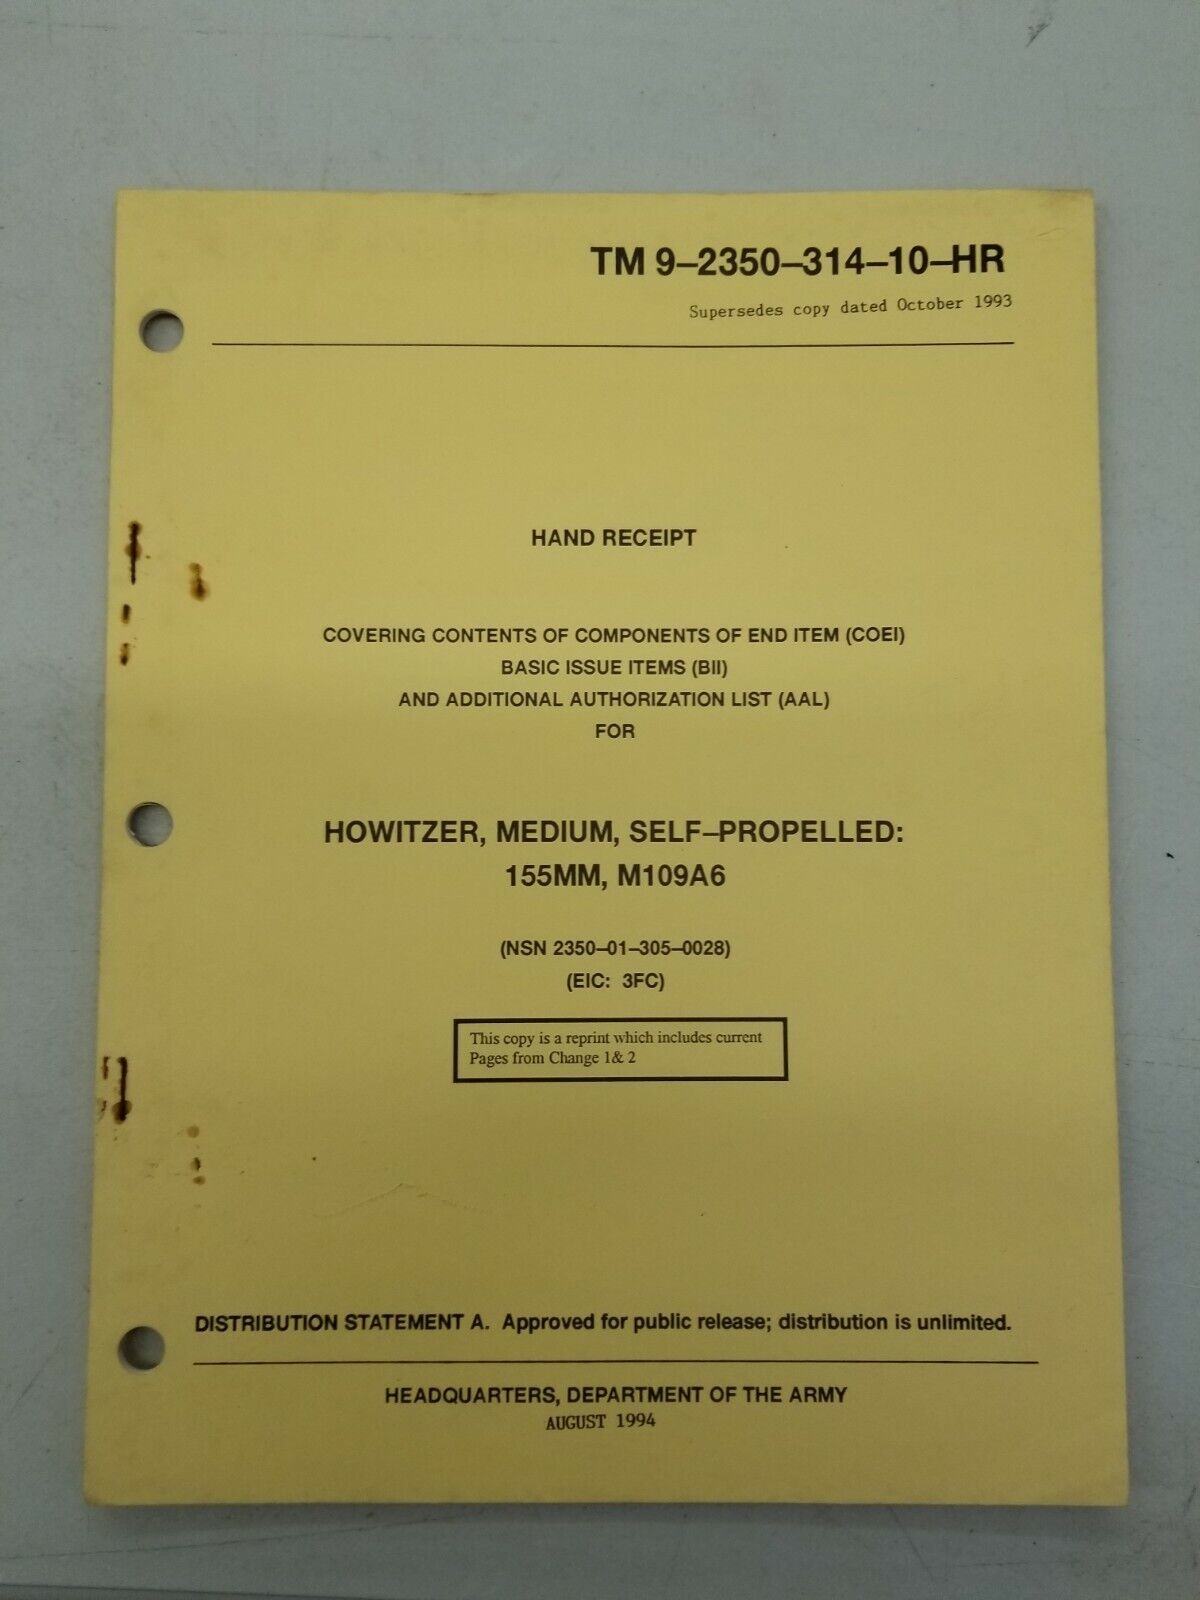 TM 9-2350-314-10-HR Howitzer, Medium, Self-Propelled; 155MM, M109A6 August 1994